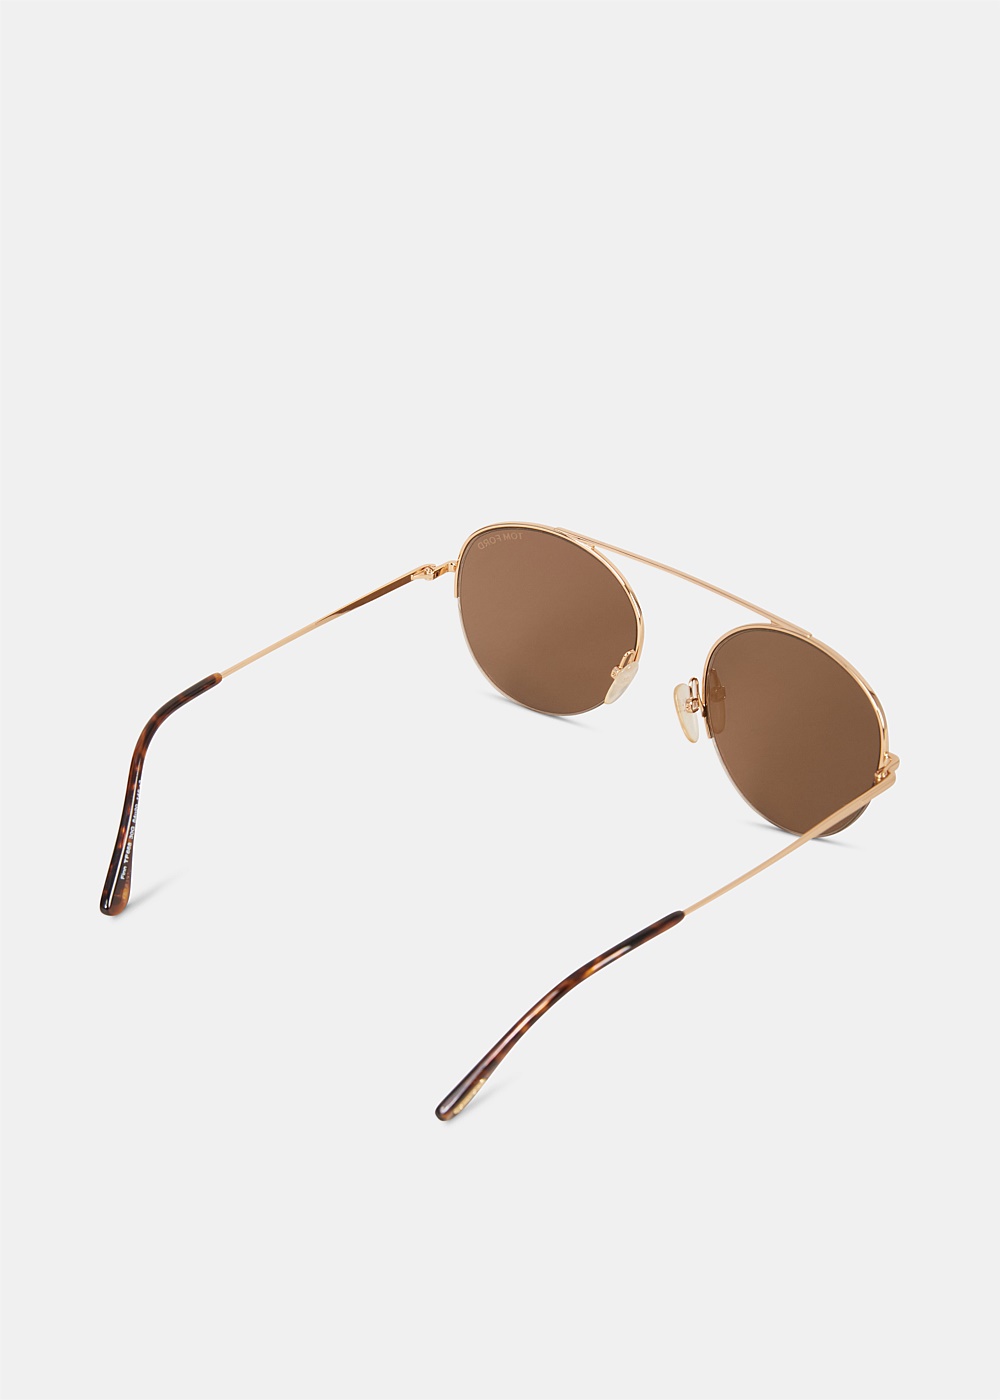 Shop Tom Ford Eyewear Finn Aviator Sunglasses | Harrolds Australia